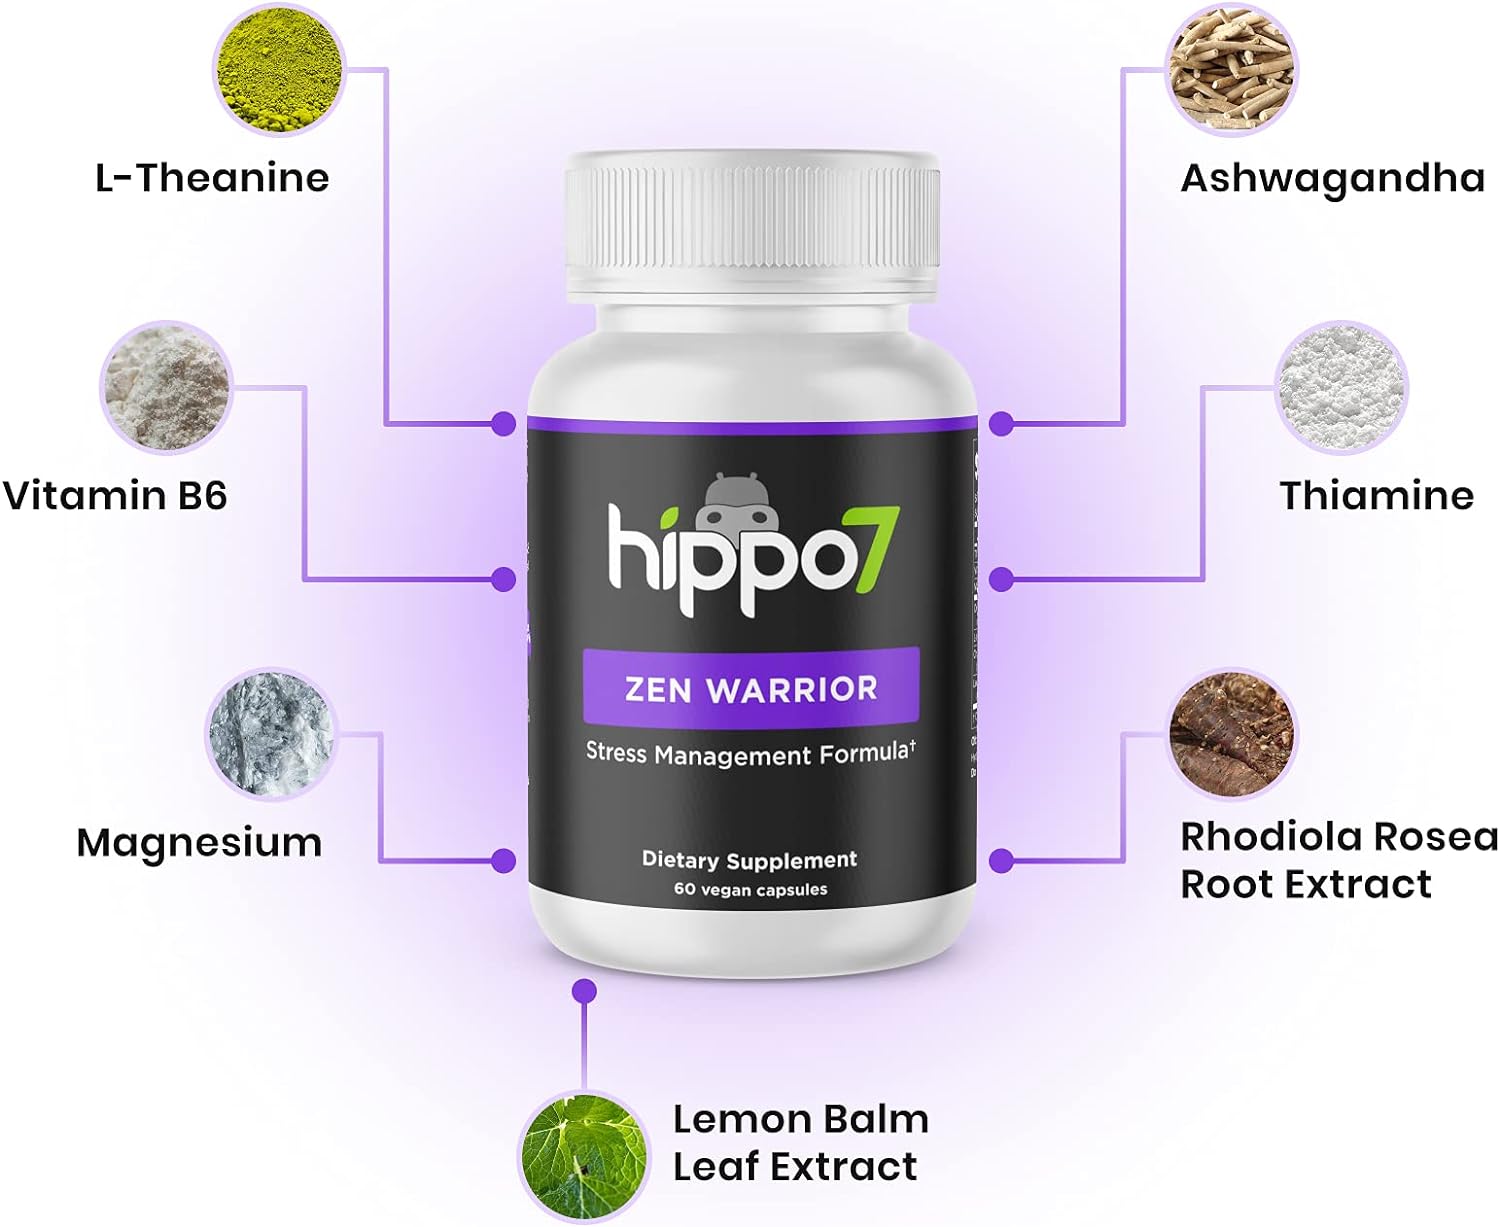 Hippo7 Zen Warrior Stress Management Formula. Organic Ashwagandha, Rhodiola, L-theanine, Magnesium. (1 Bottle, 60 Capsules) : Health & Household